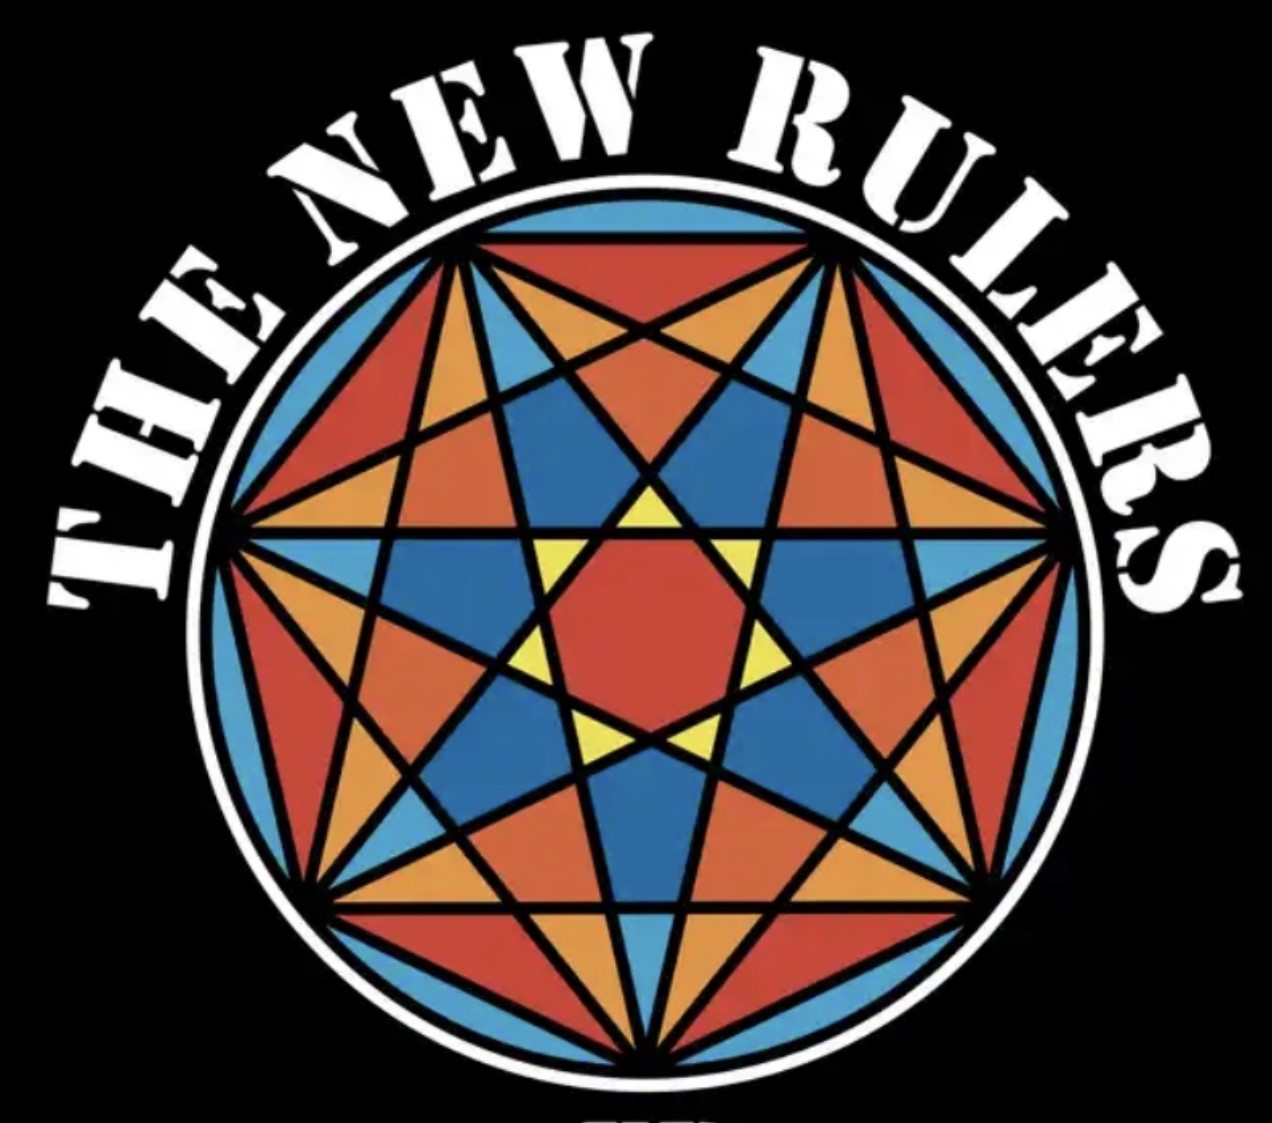 New Rulers